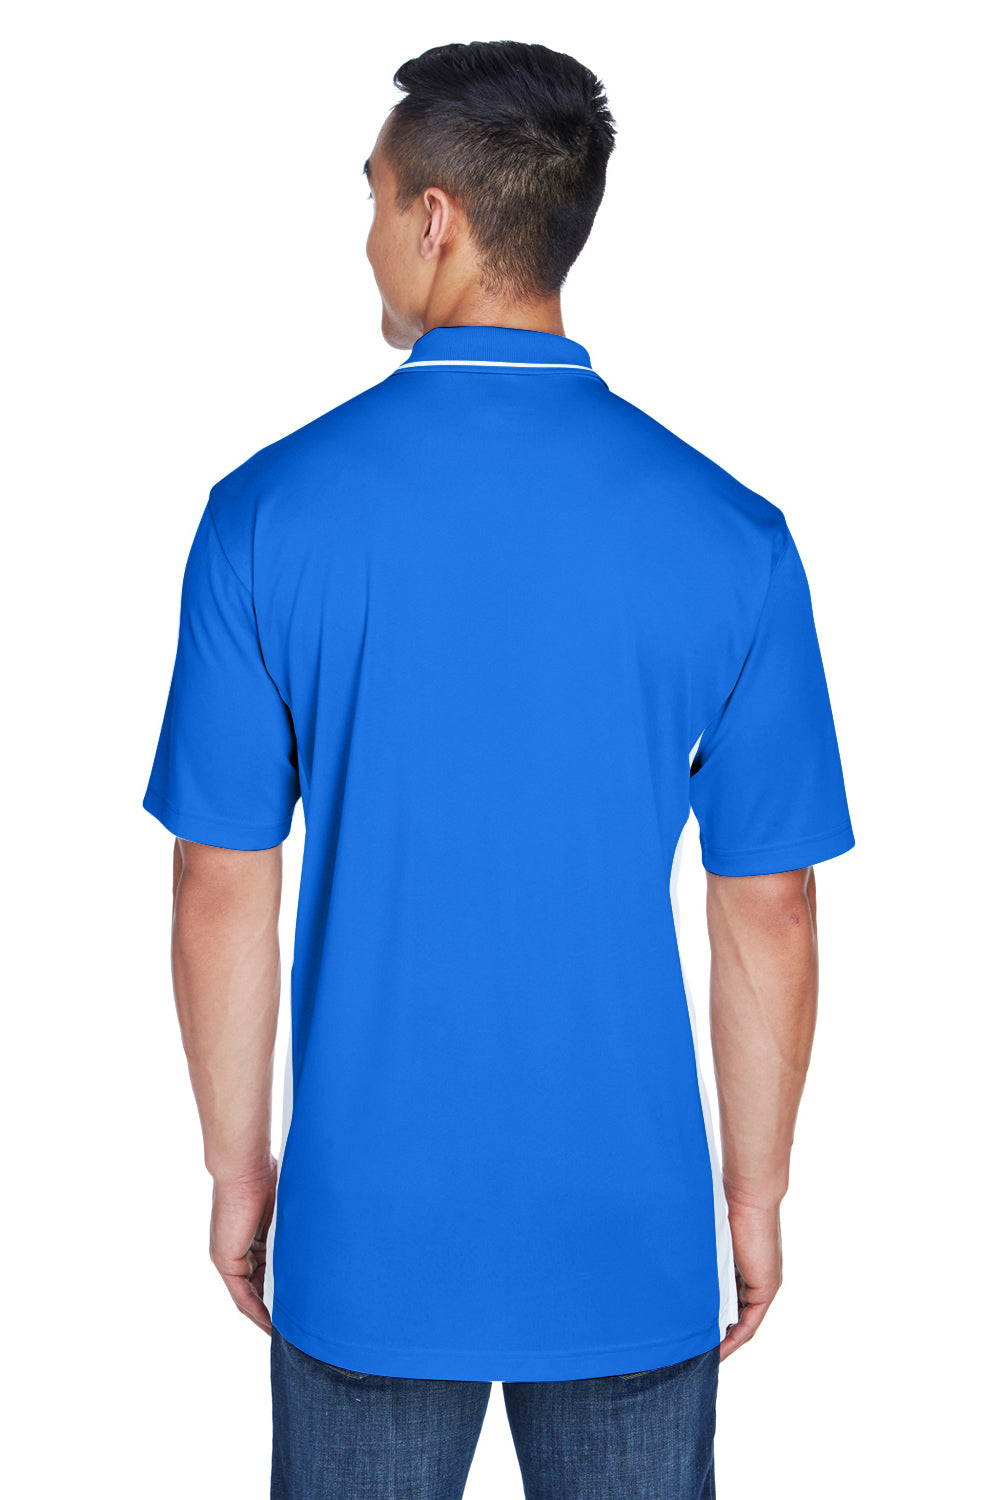 UltraClub 8406 Mens Cool & Dry Moisture Wicking Short Sleeve Polo Shirt Royal Blue/White Back